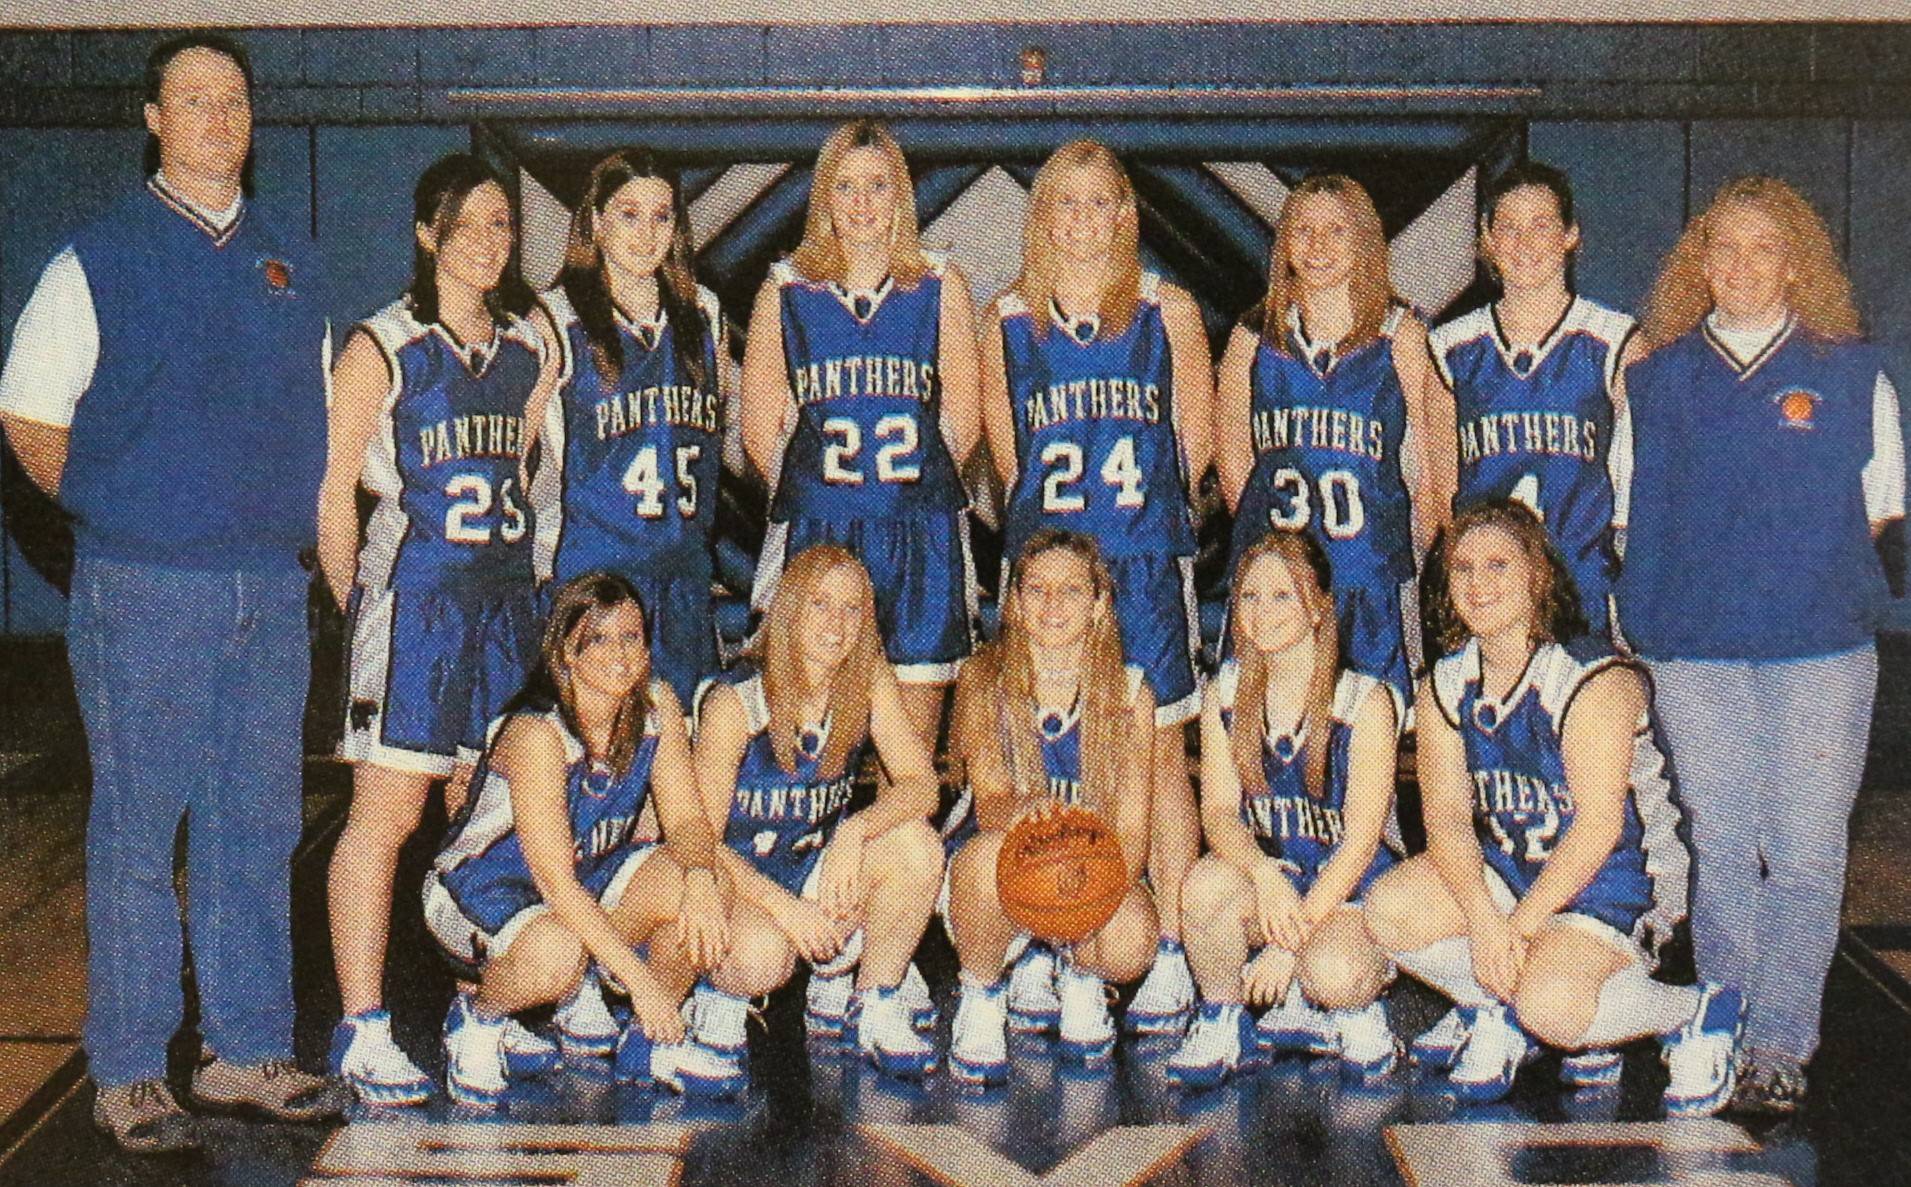 2006 Girls basketball